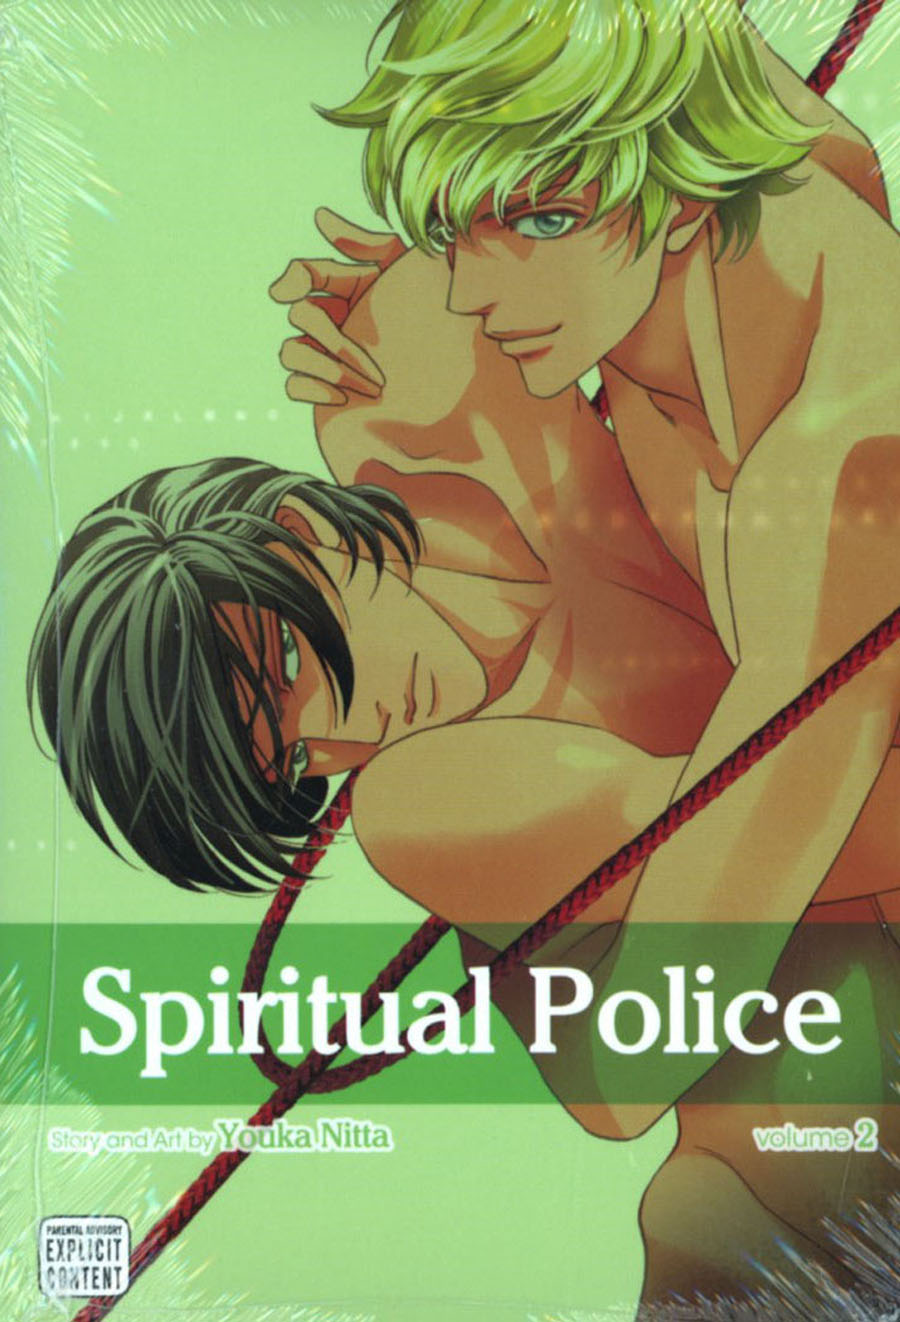 Spiritual Police Vol 2 TP